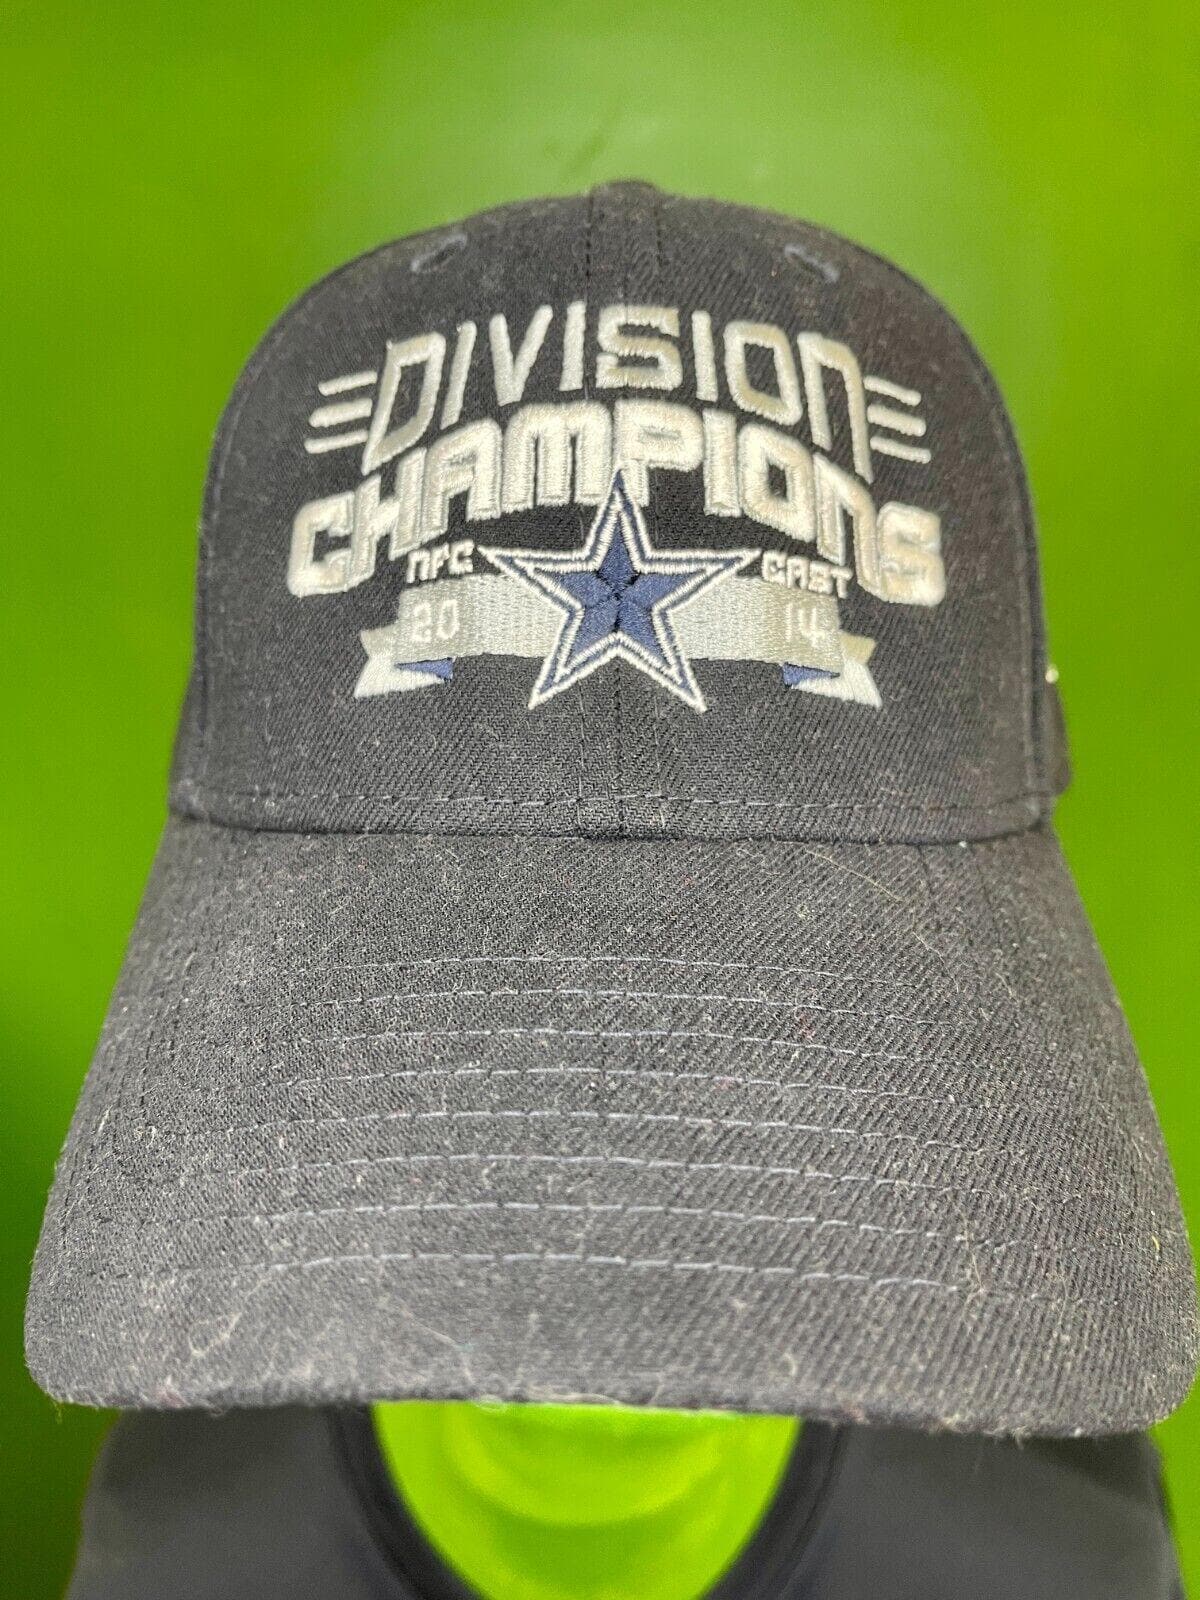 NFL Dallas Cowboys New Era 9FORTY Baseball Cap Hat 2014 Div Champs OSFM